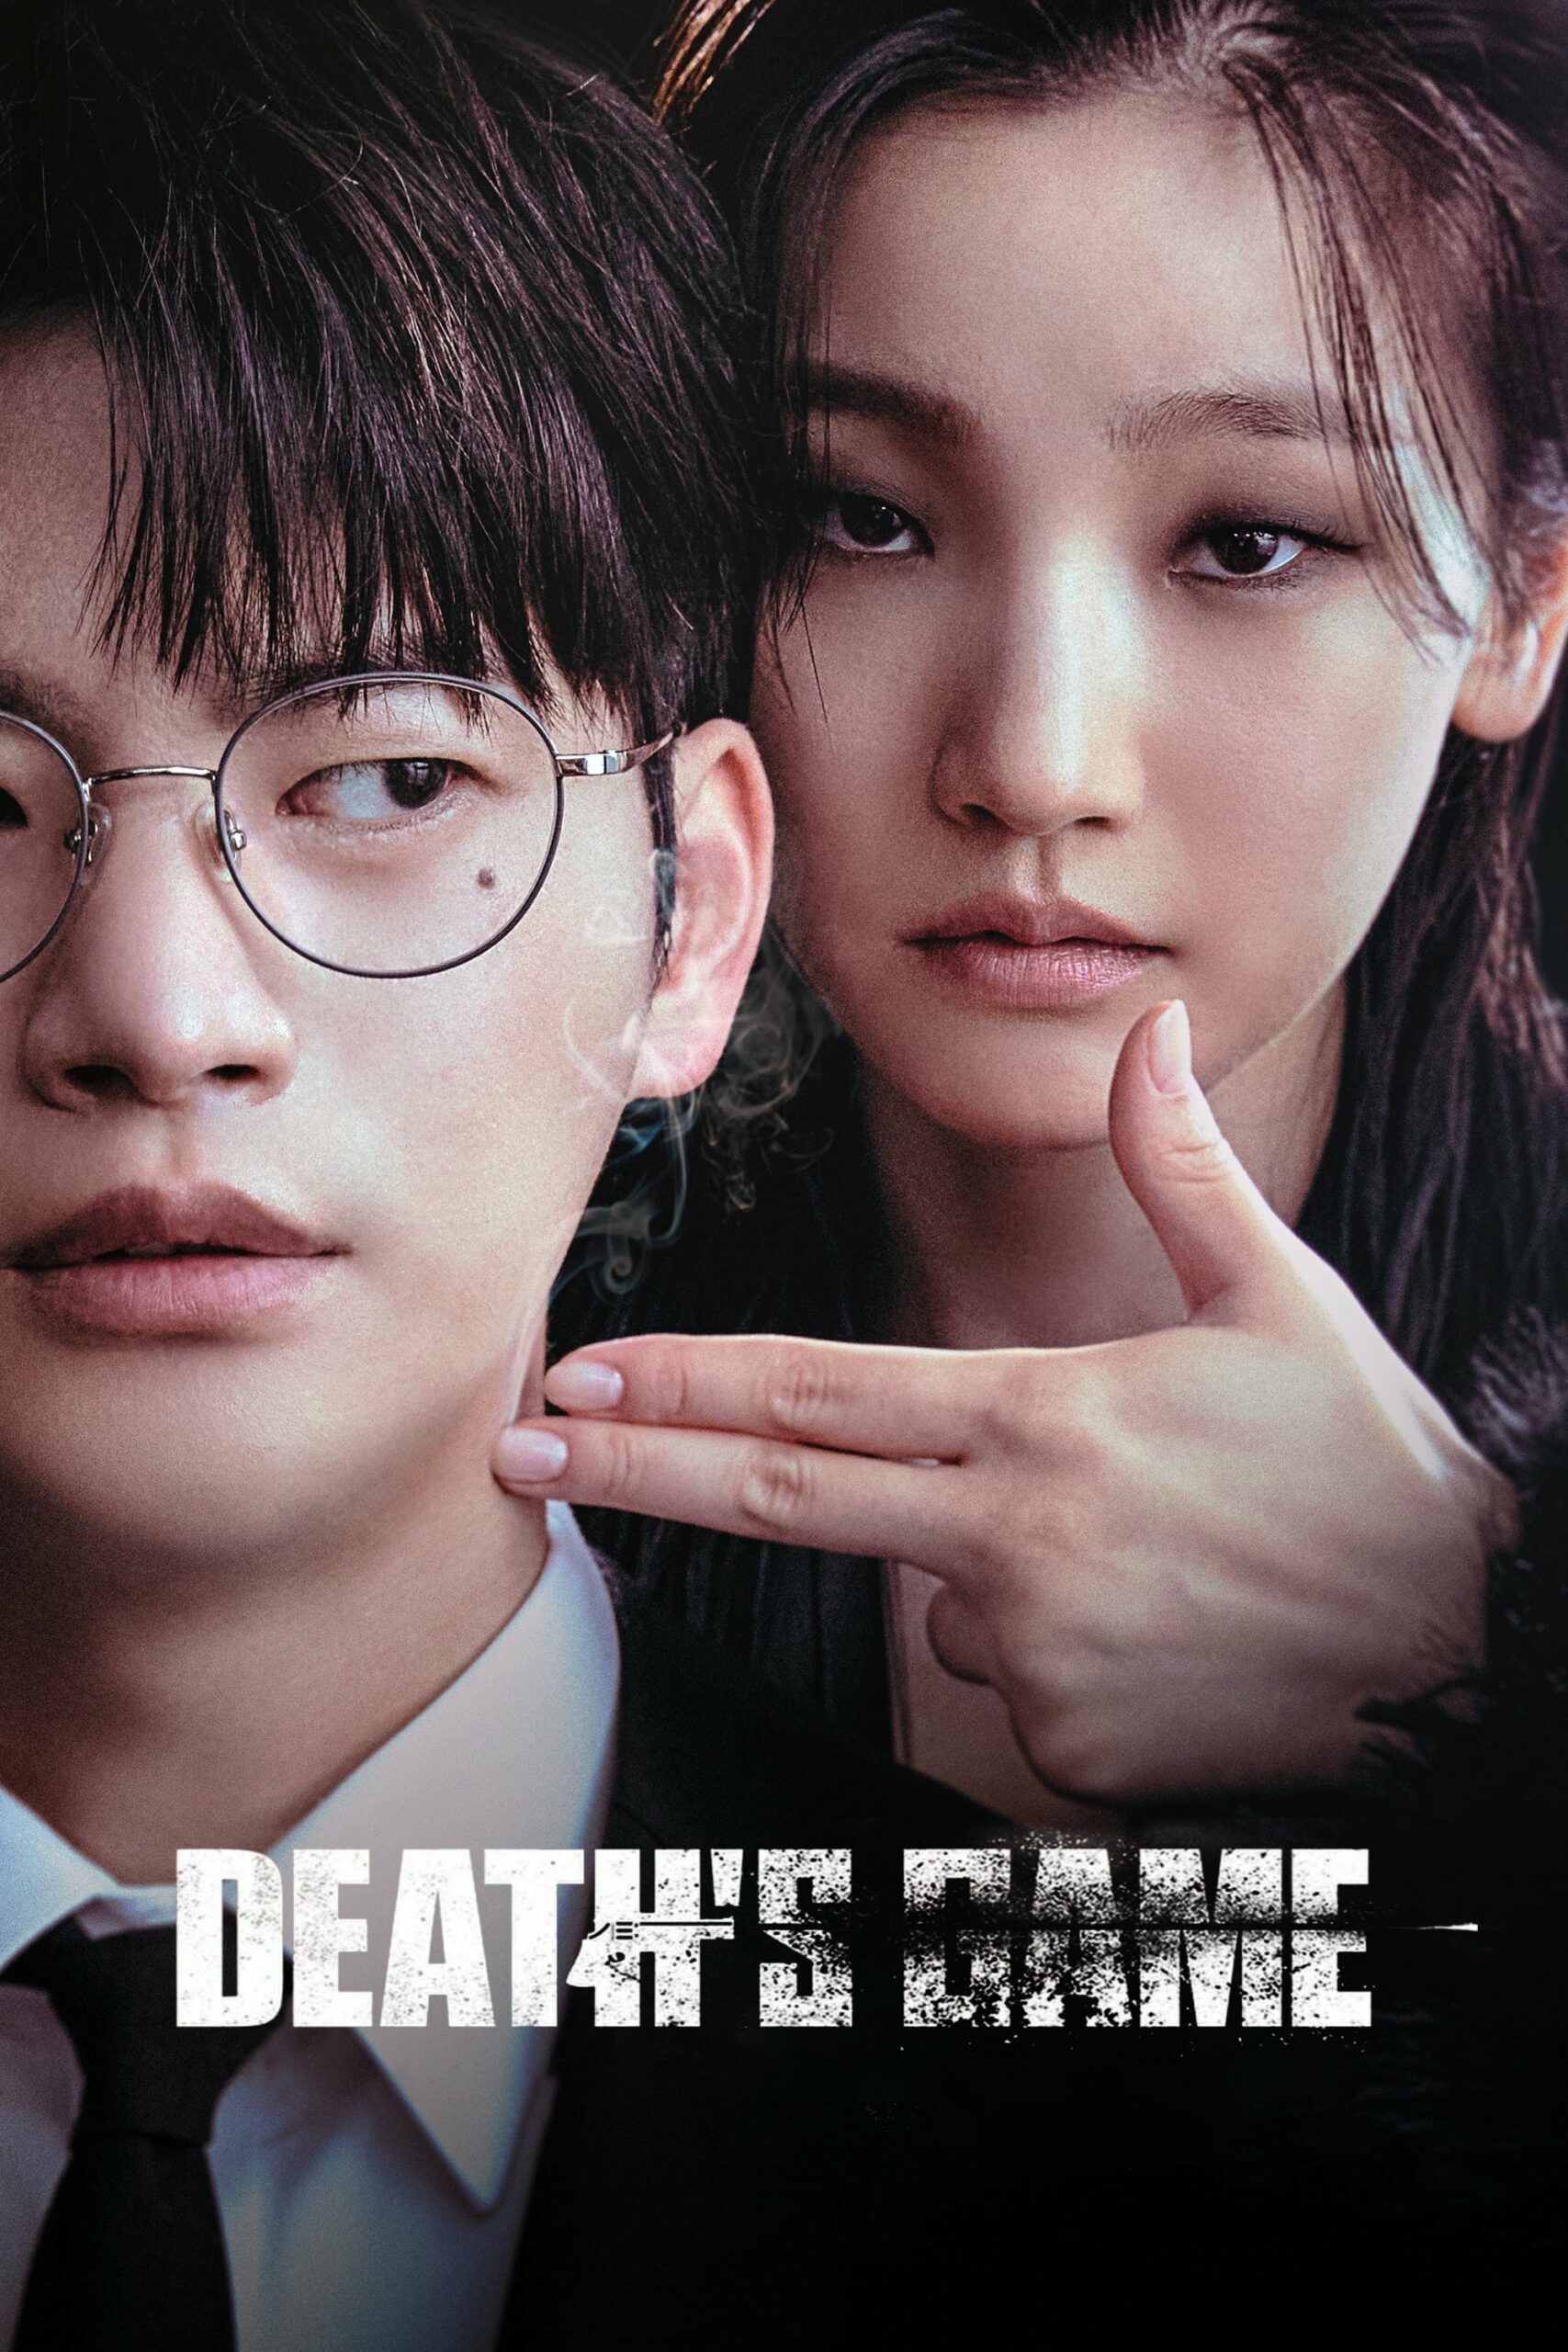 Plakát pro film “Death’s Game”